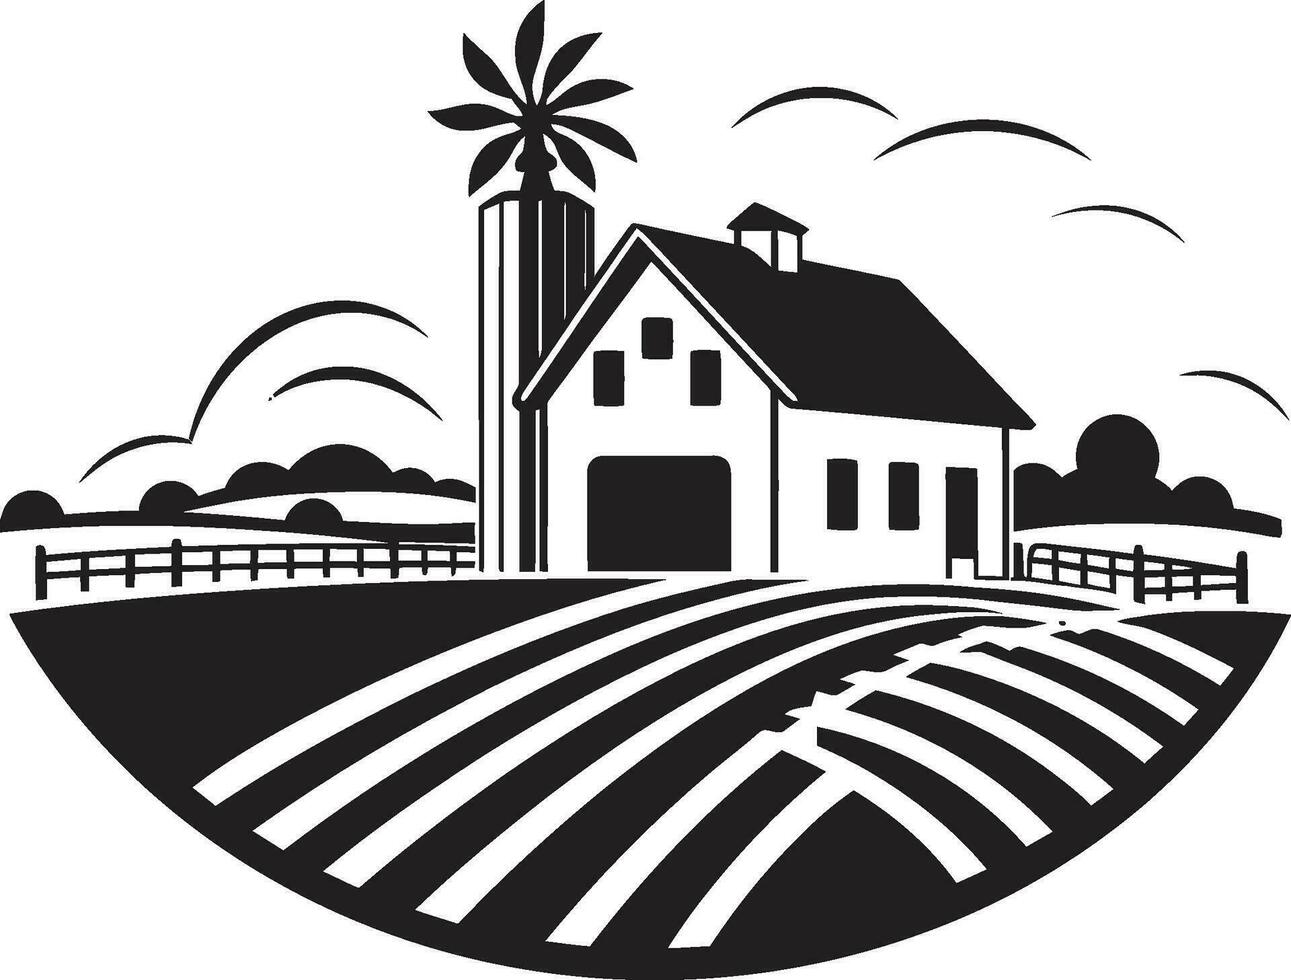 Harvest Haven Symbol Farmers House Vector Emblem Agrarian Abode Blueprint Farmhouse Design Vector Logo